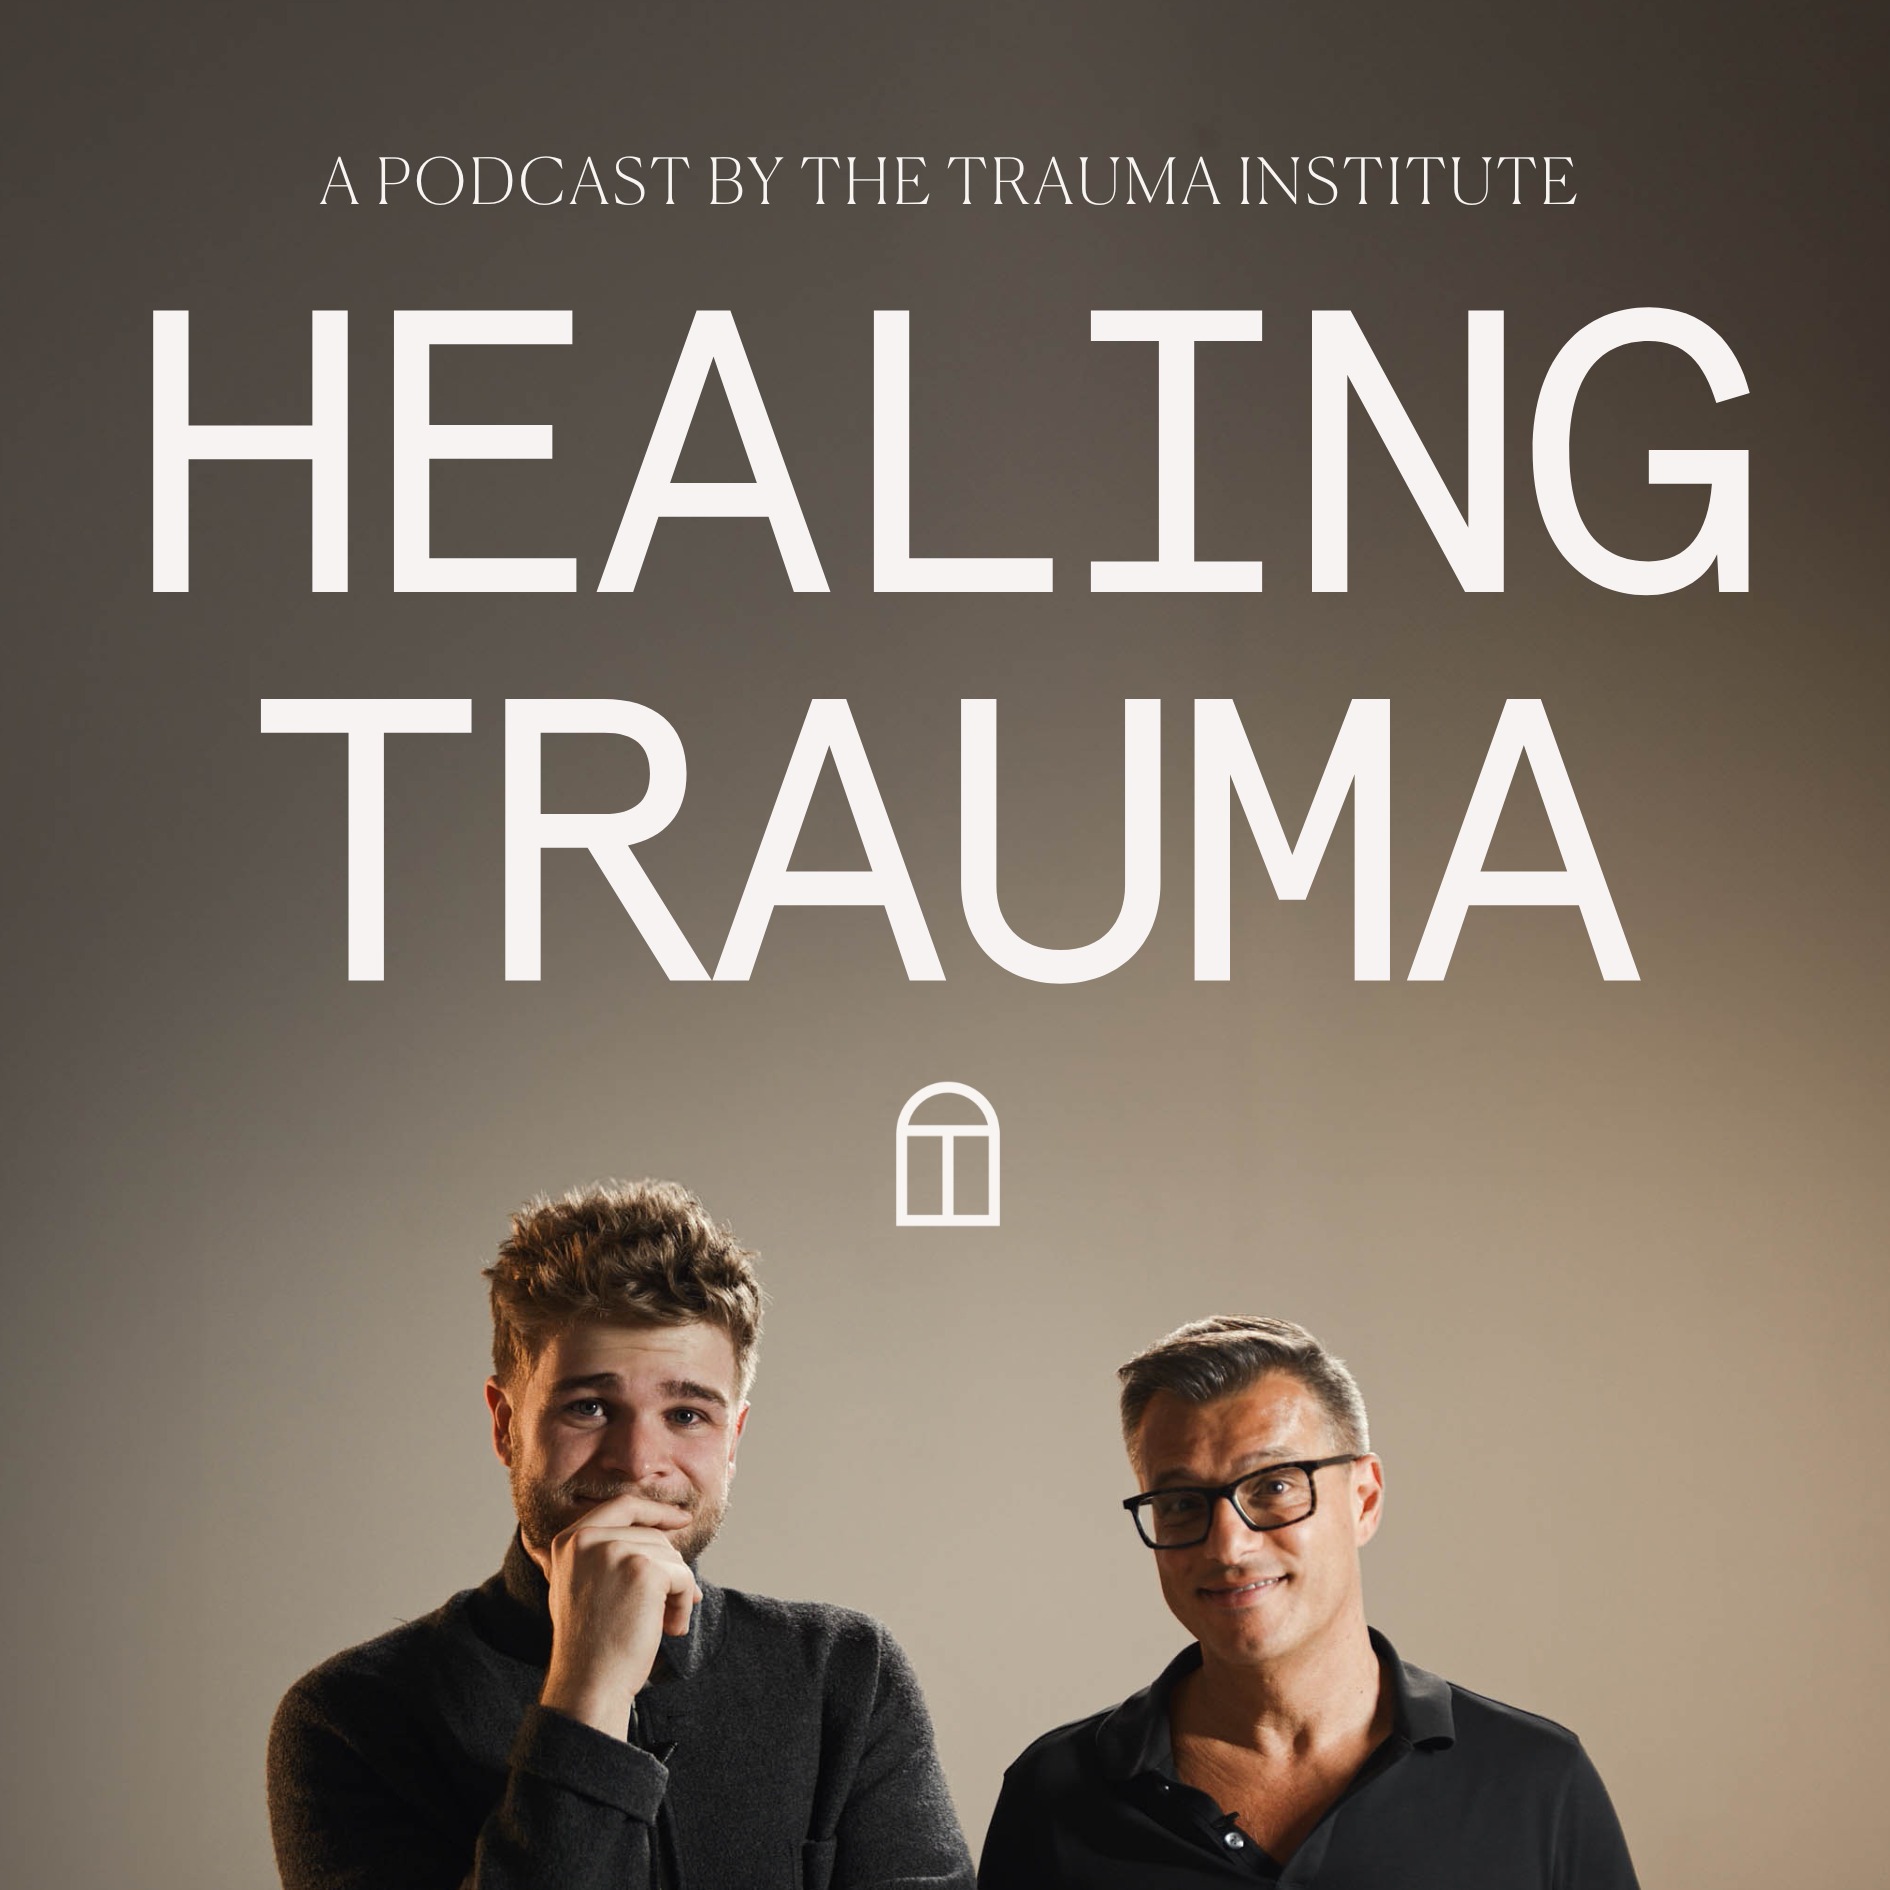 Trauma 101: Our 21st Century Story